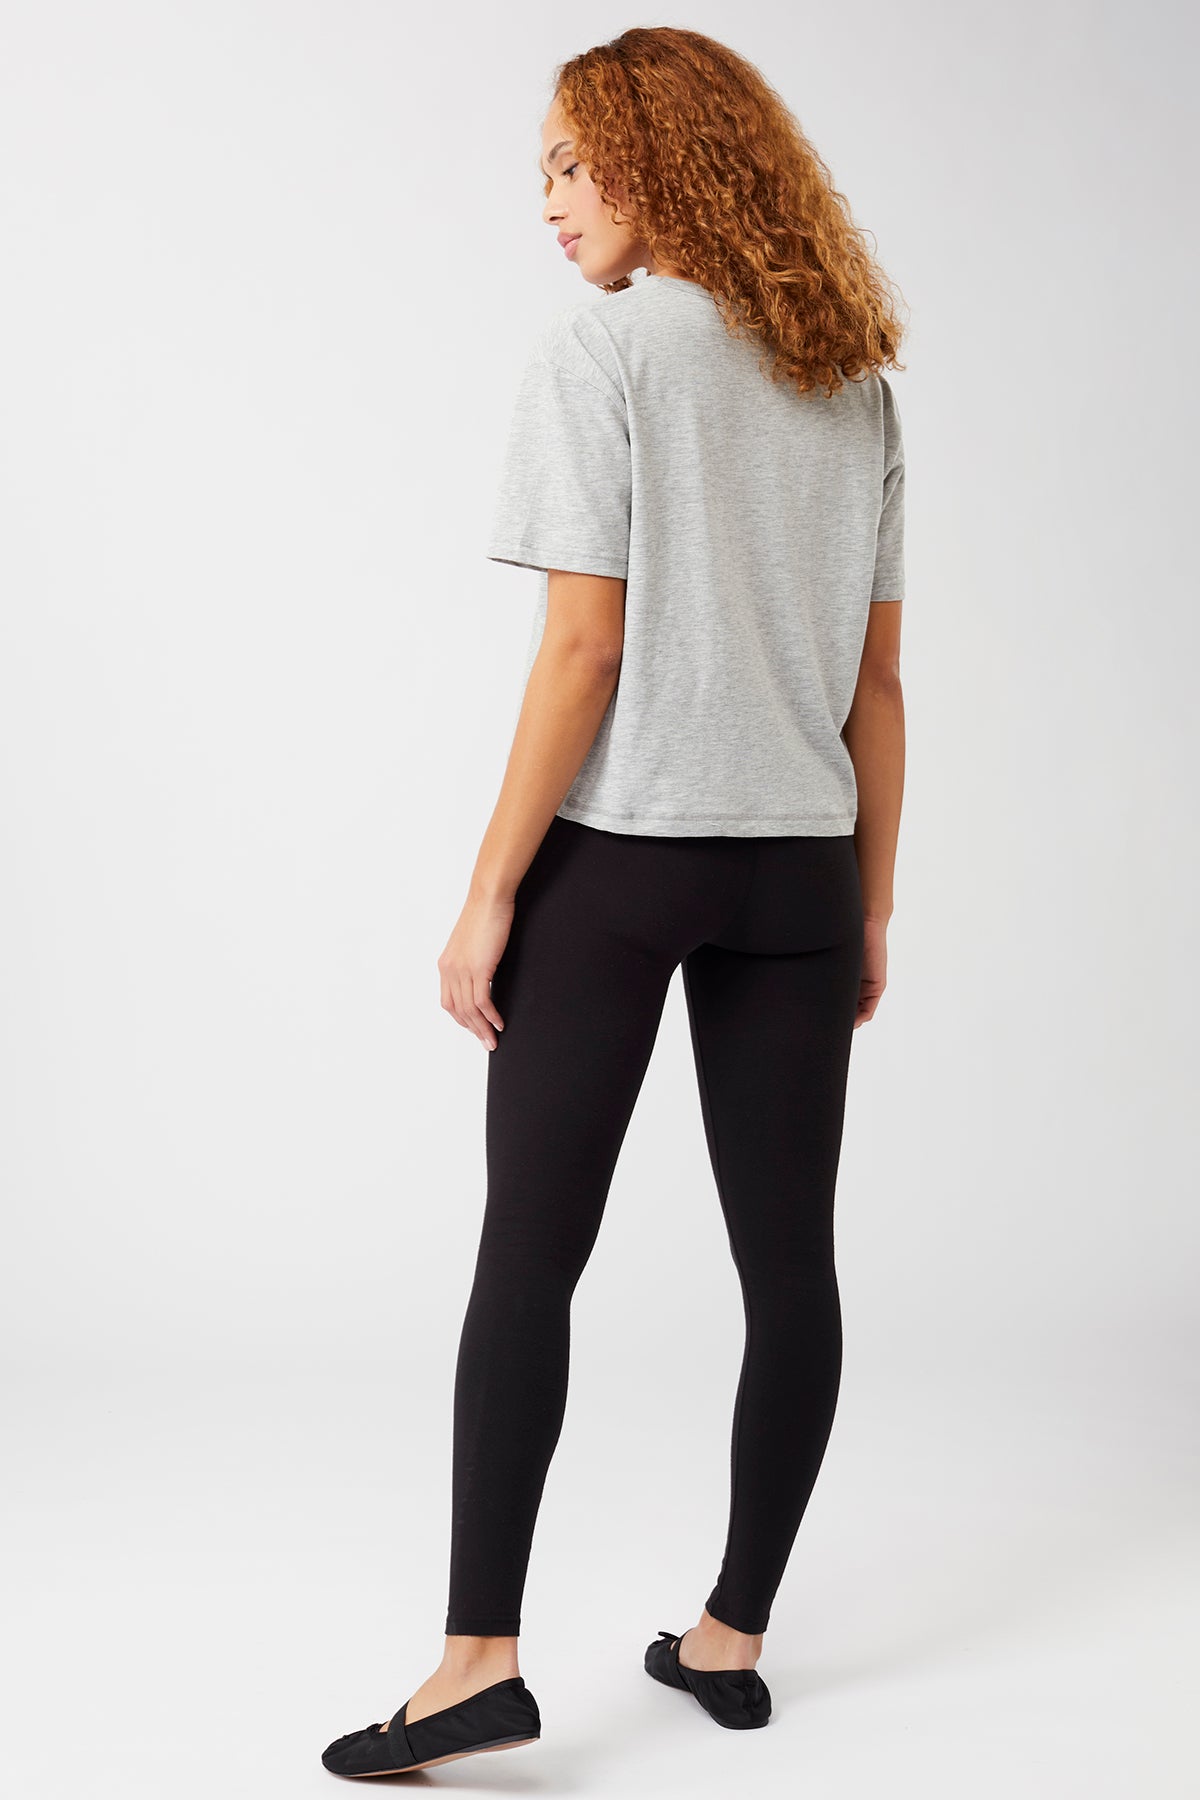 Mandala Yoga Shirt Grau Outfit Rückseite - Boxy T-Shirt